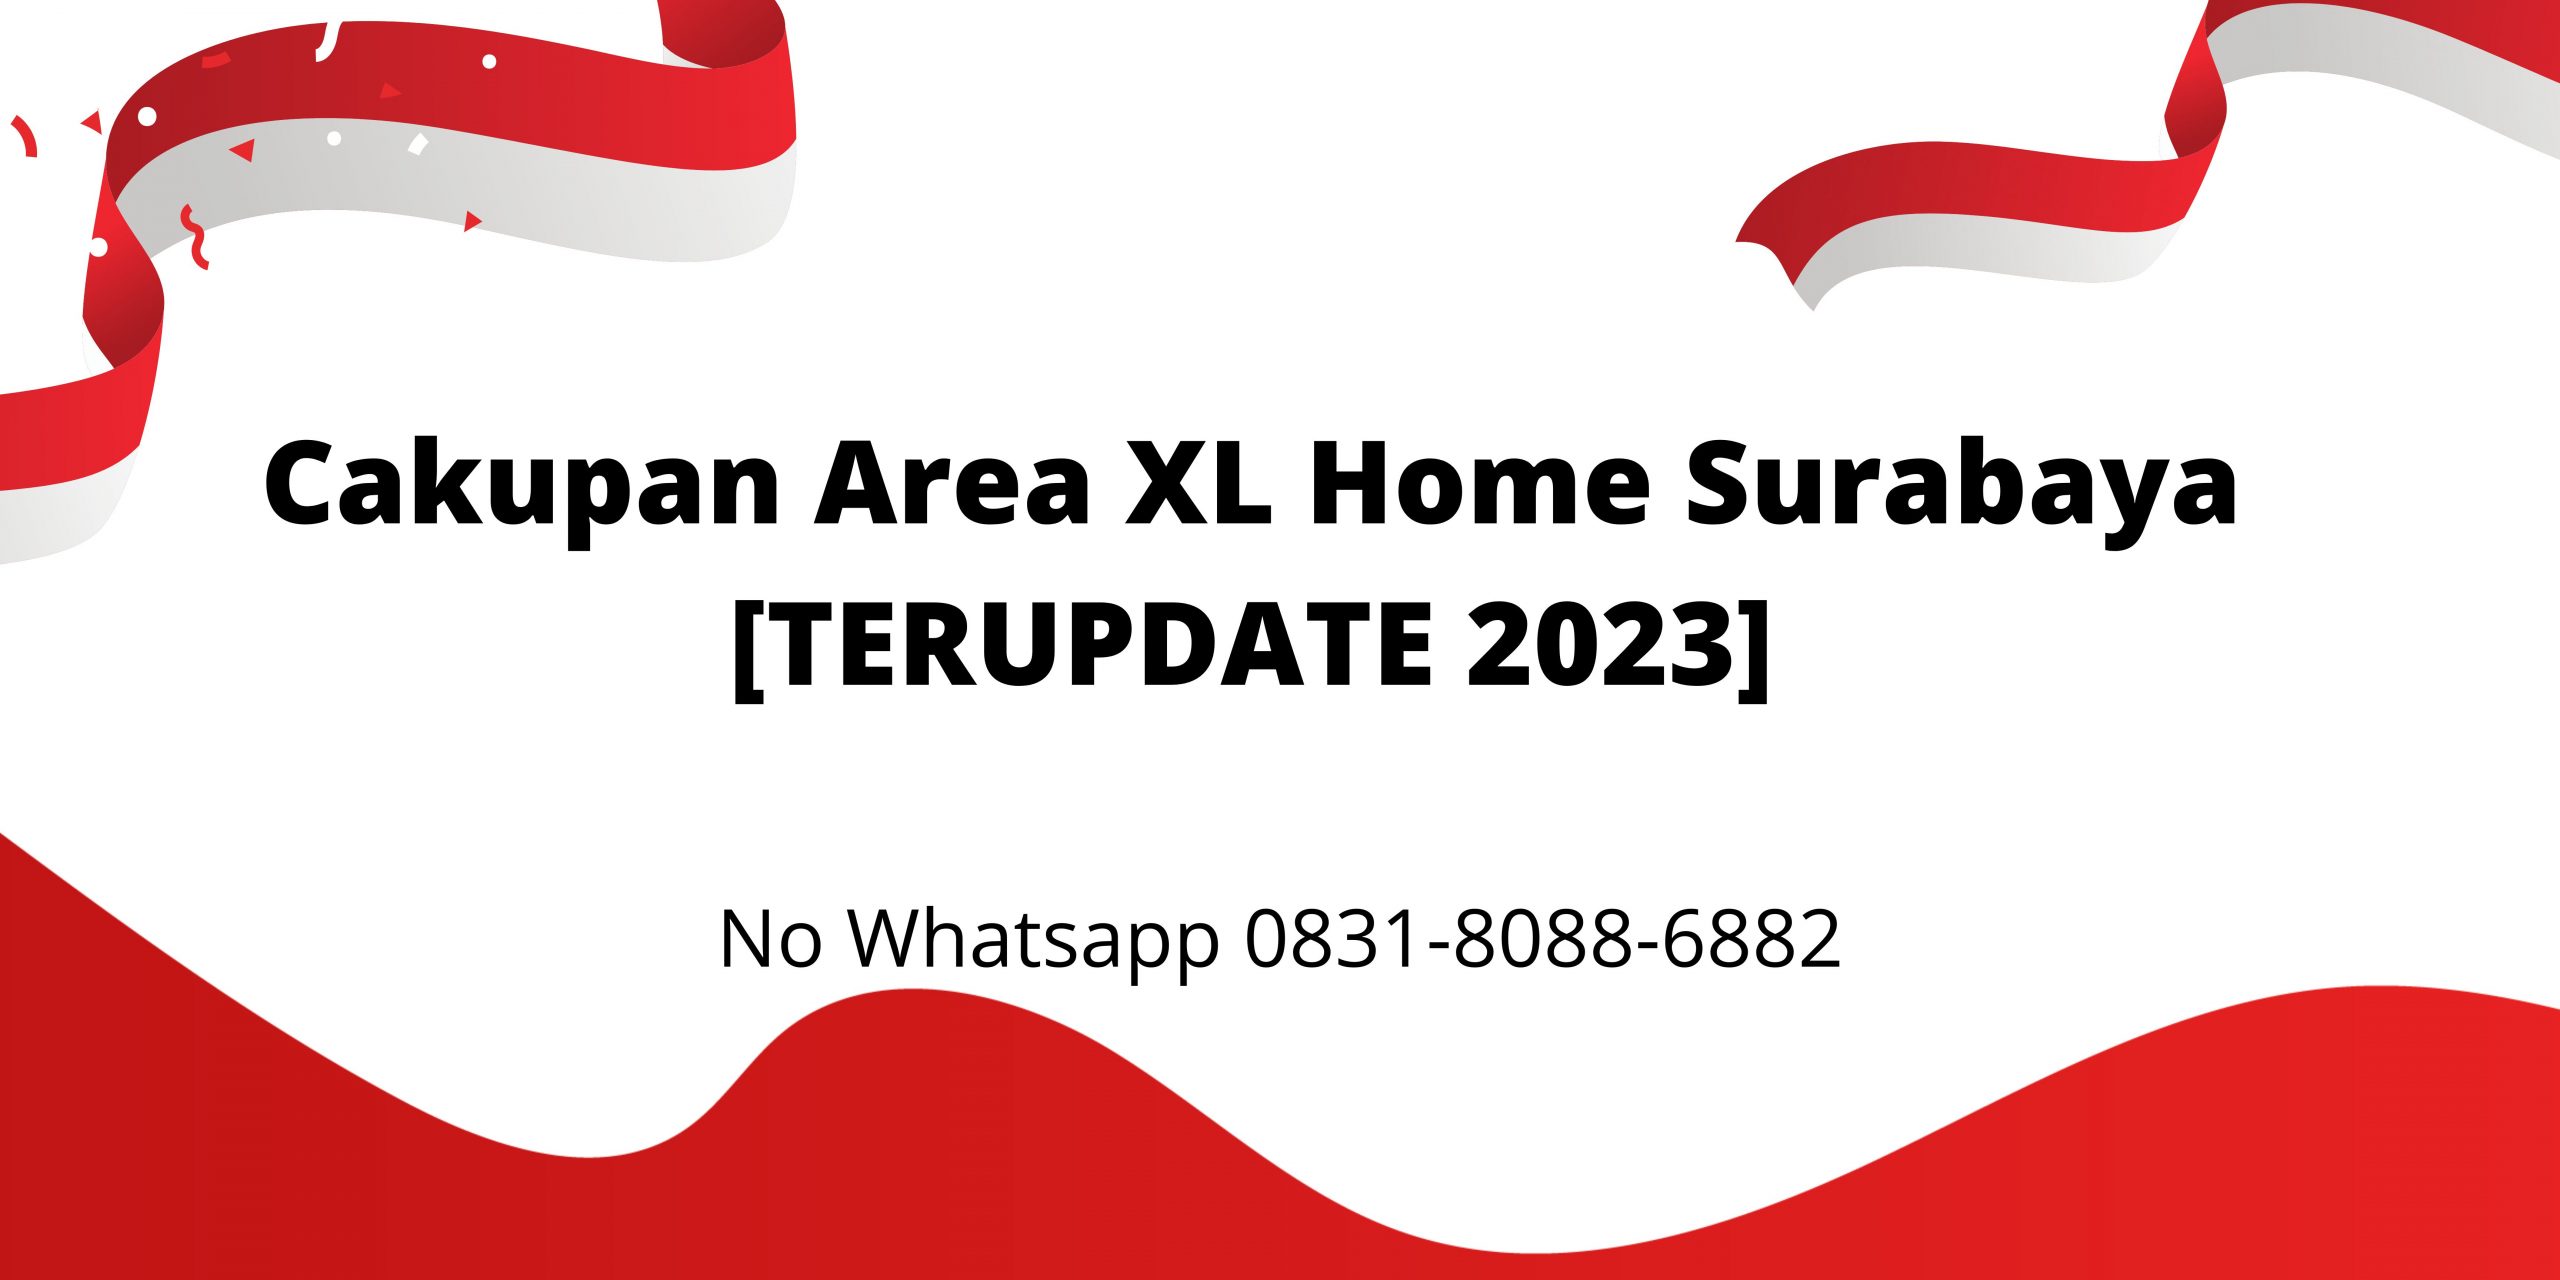 Cakupan Area XL Home Surabaya